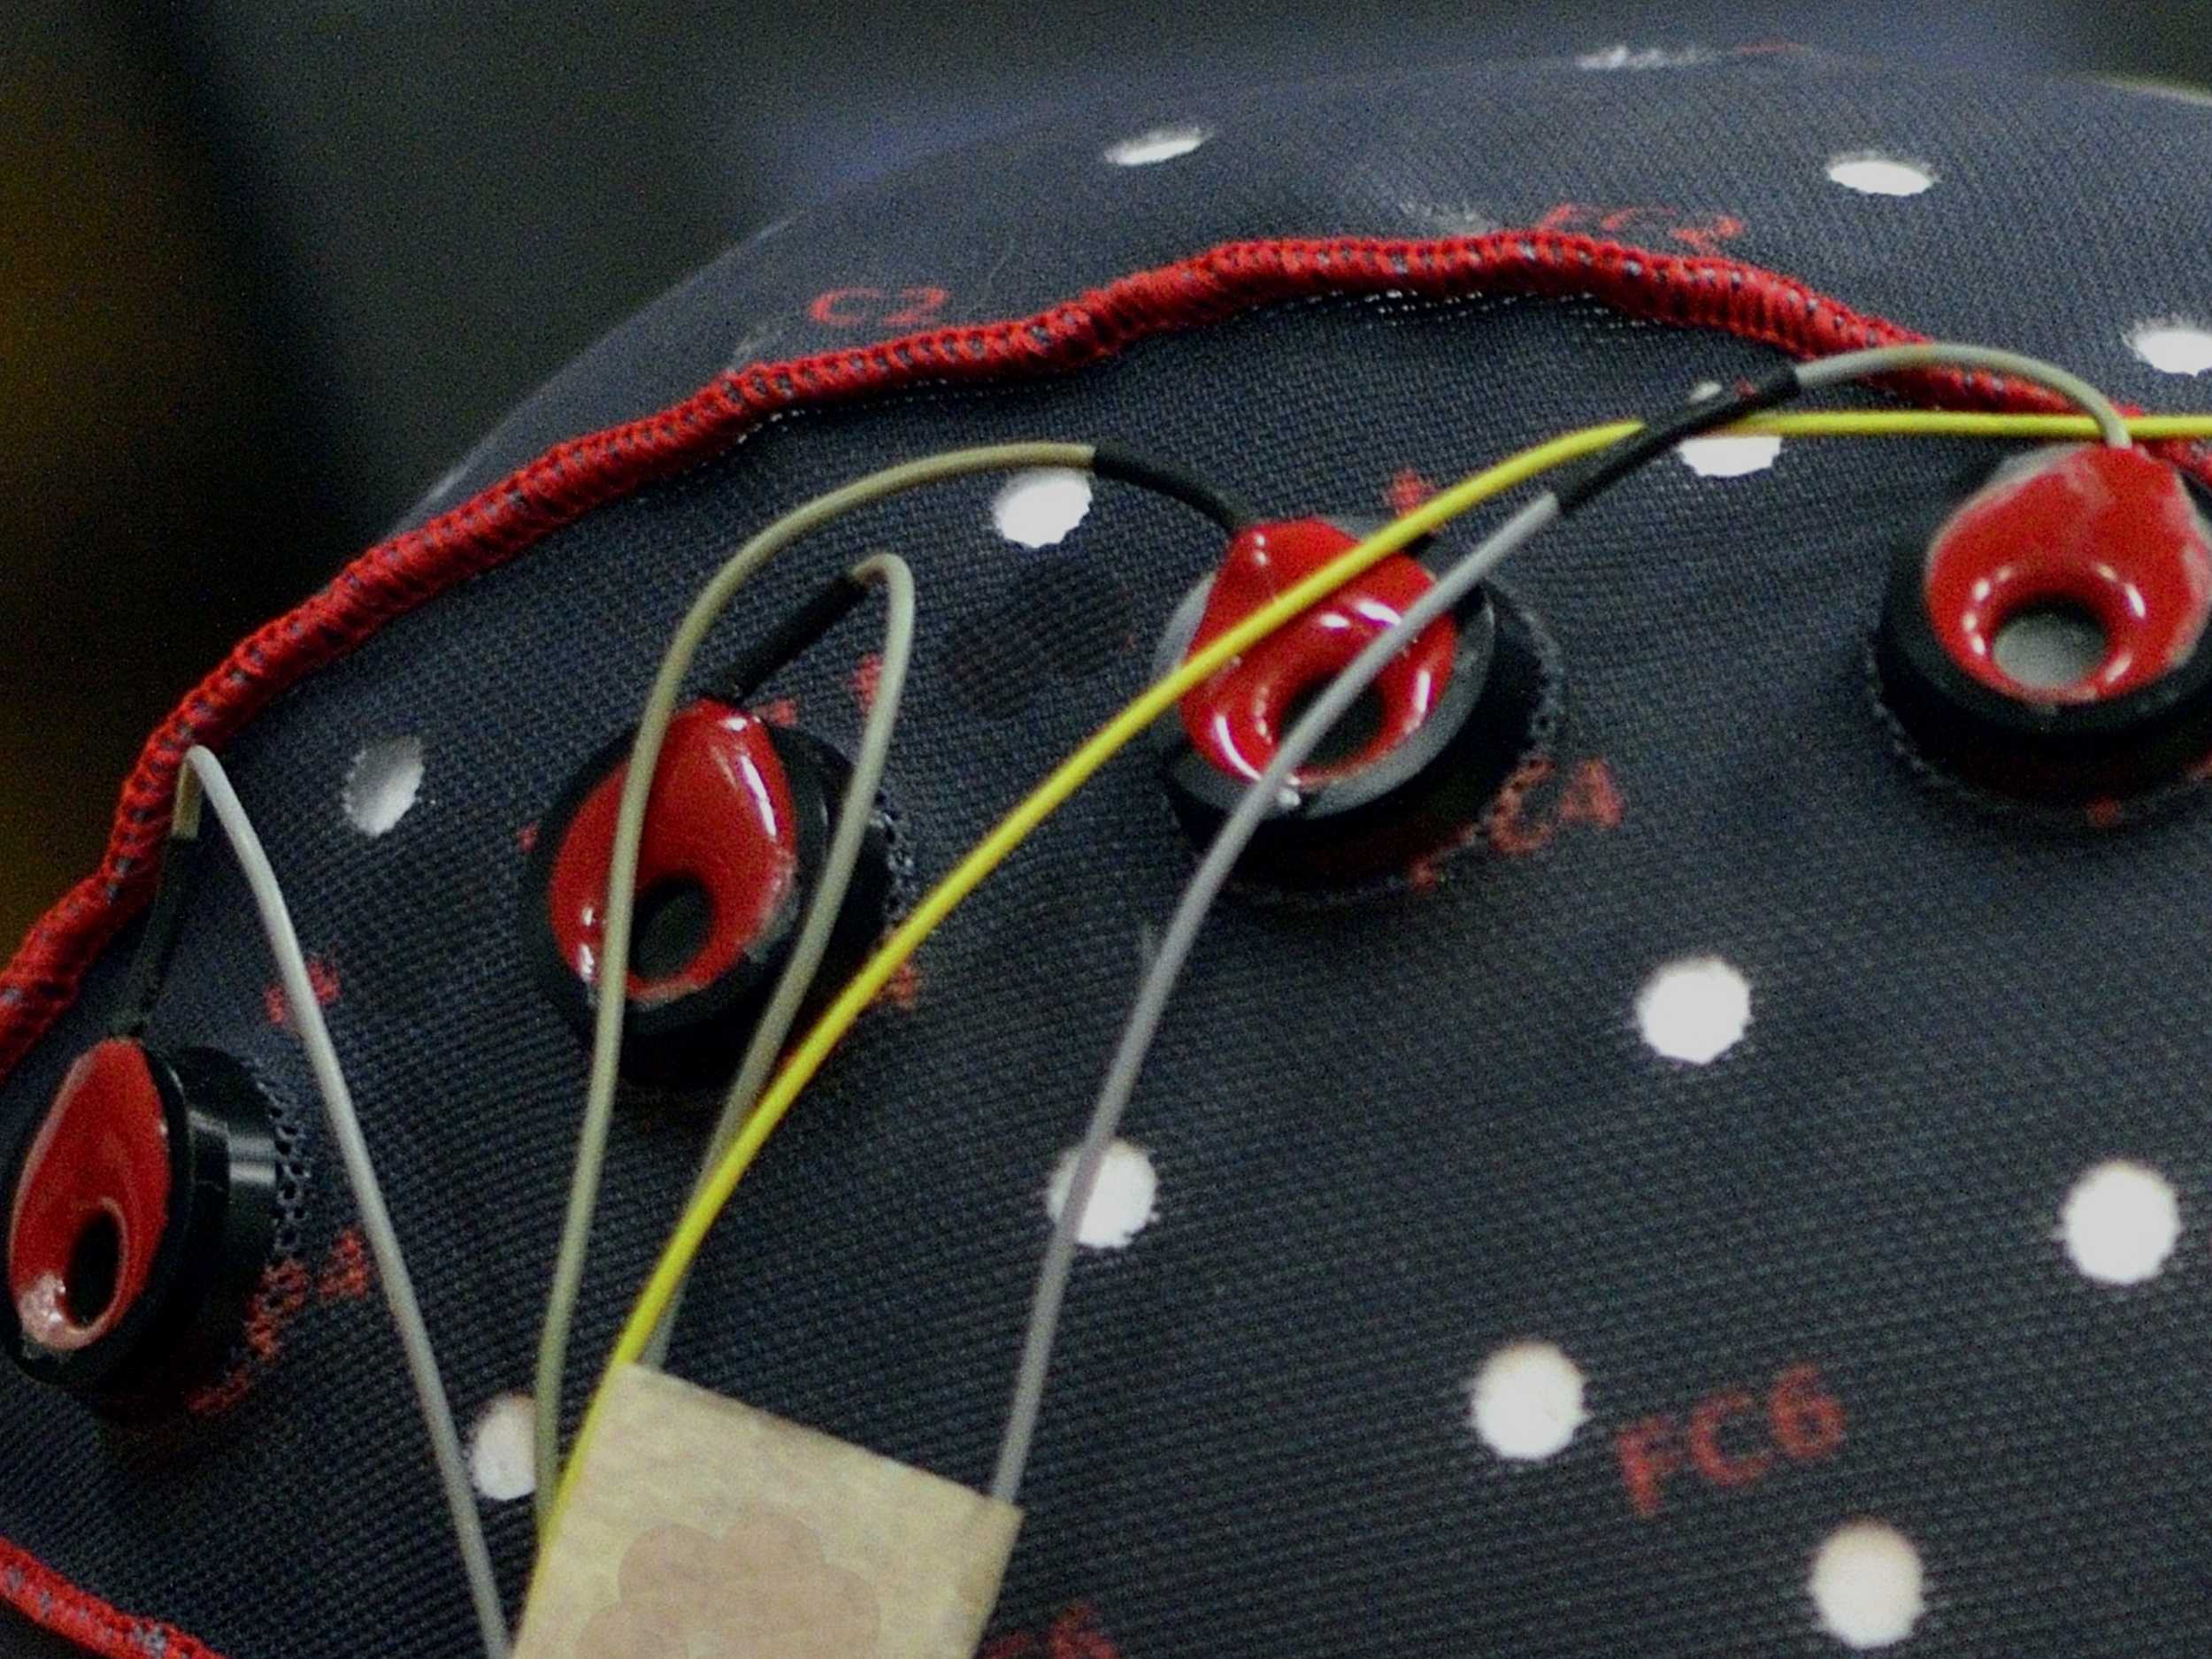 EEG head cap with electrodes